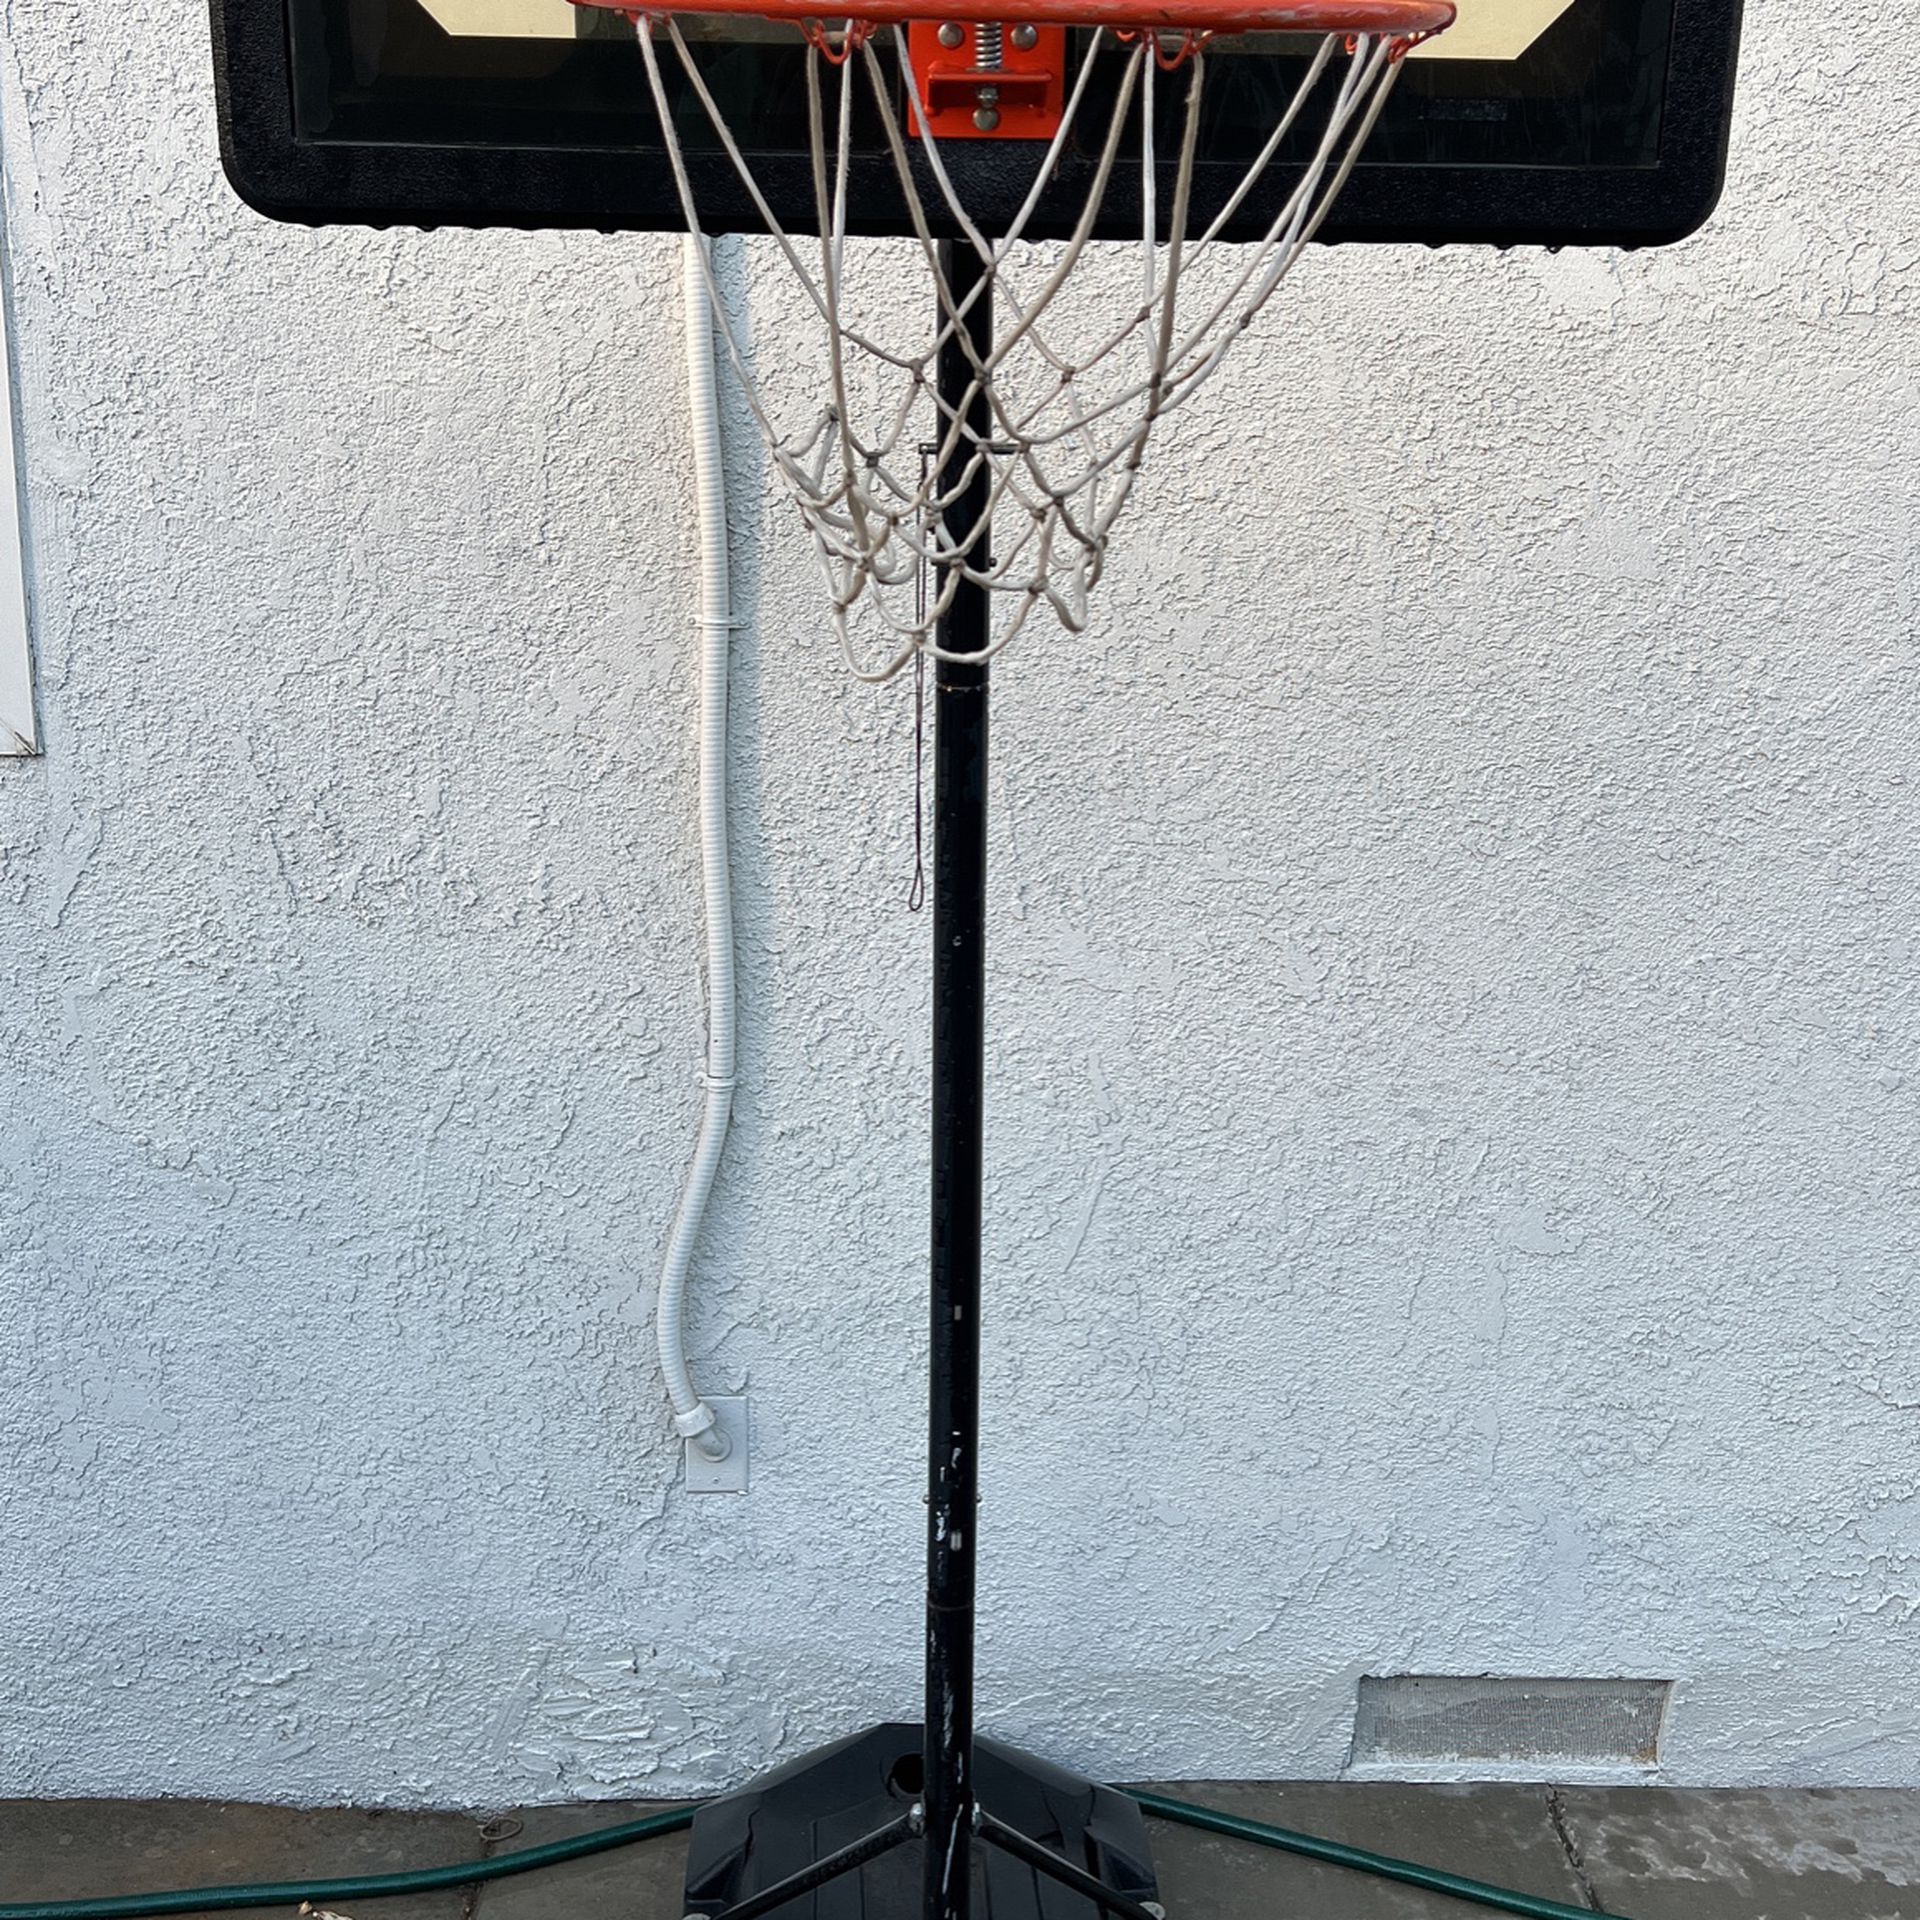 Sklz Pro Mini Basketball Hoop